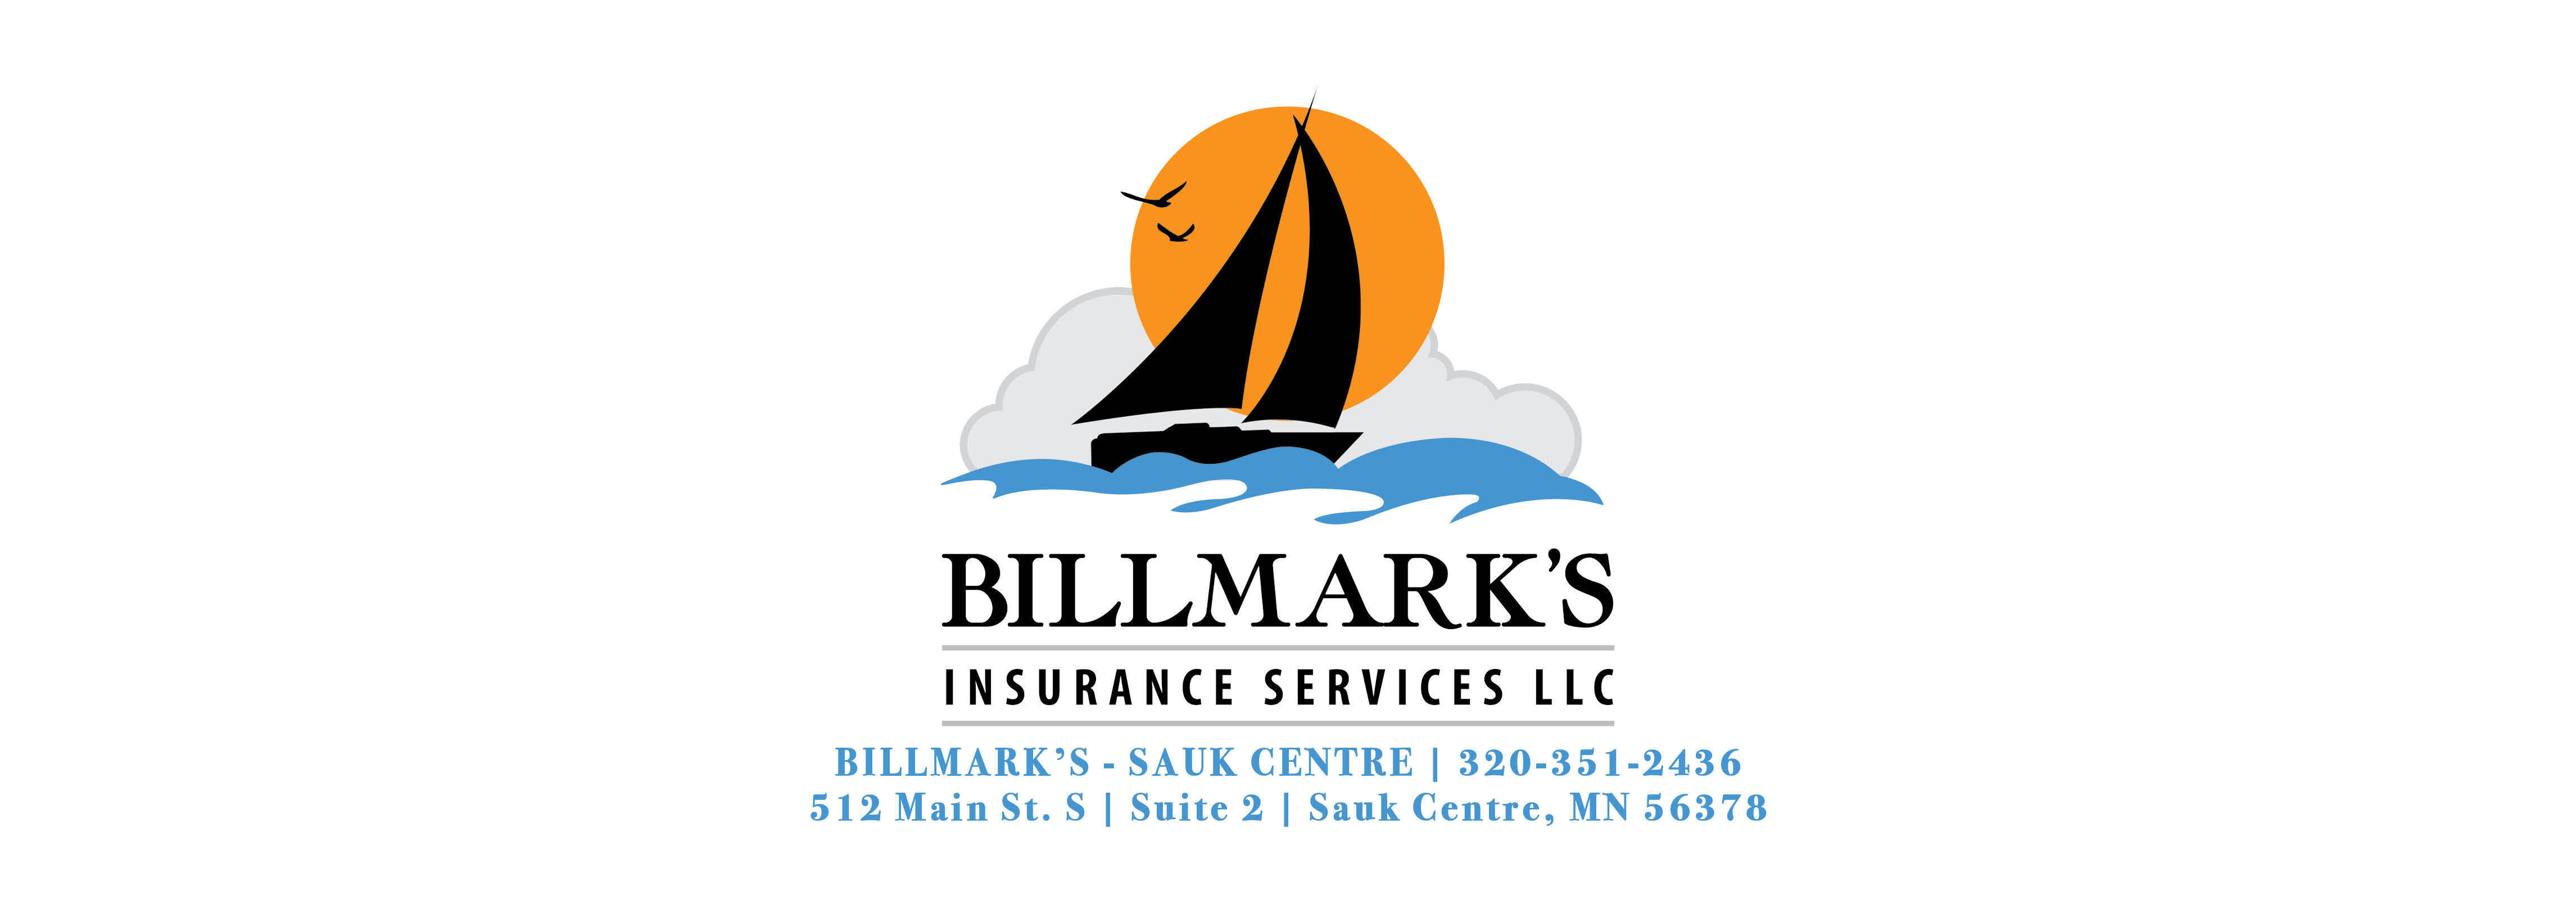 Sauk Centre - Billmark's Insurance Services